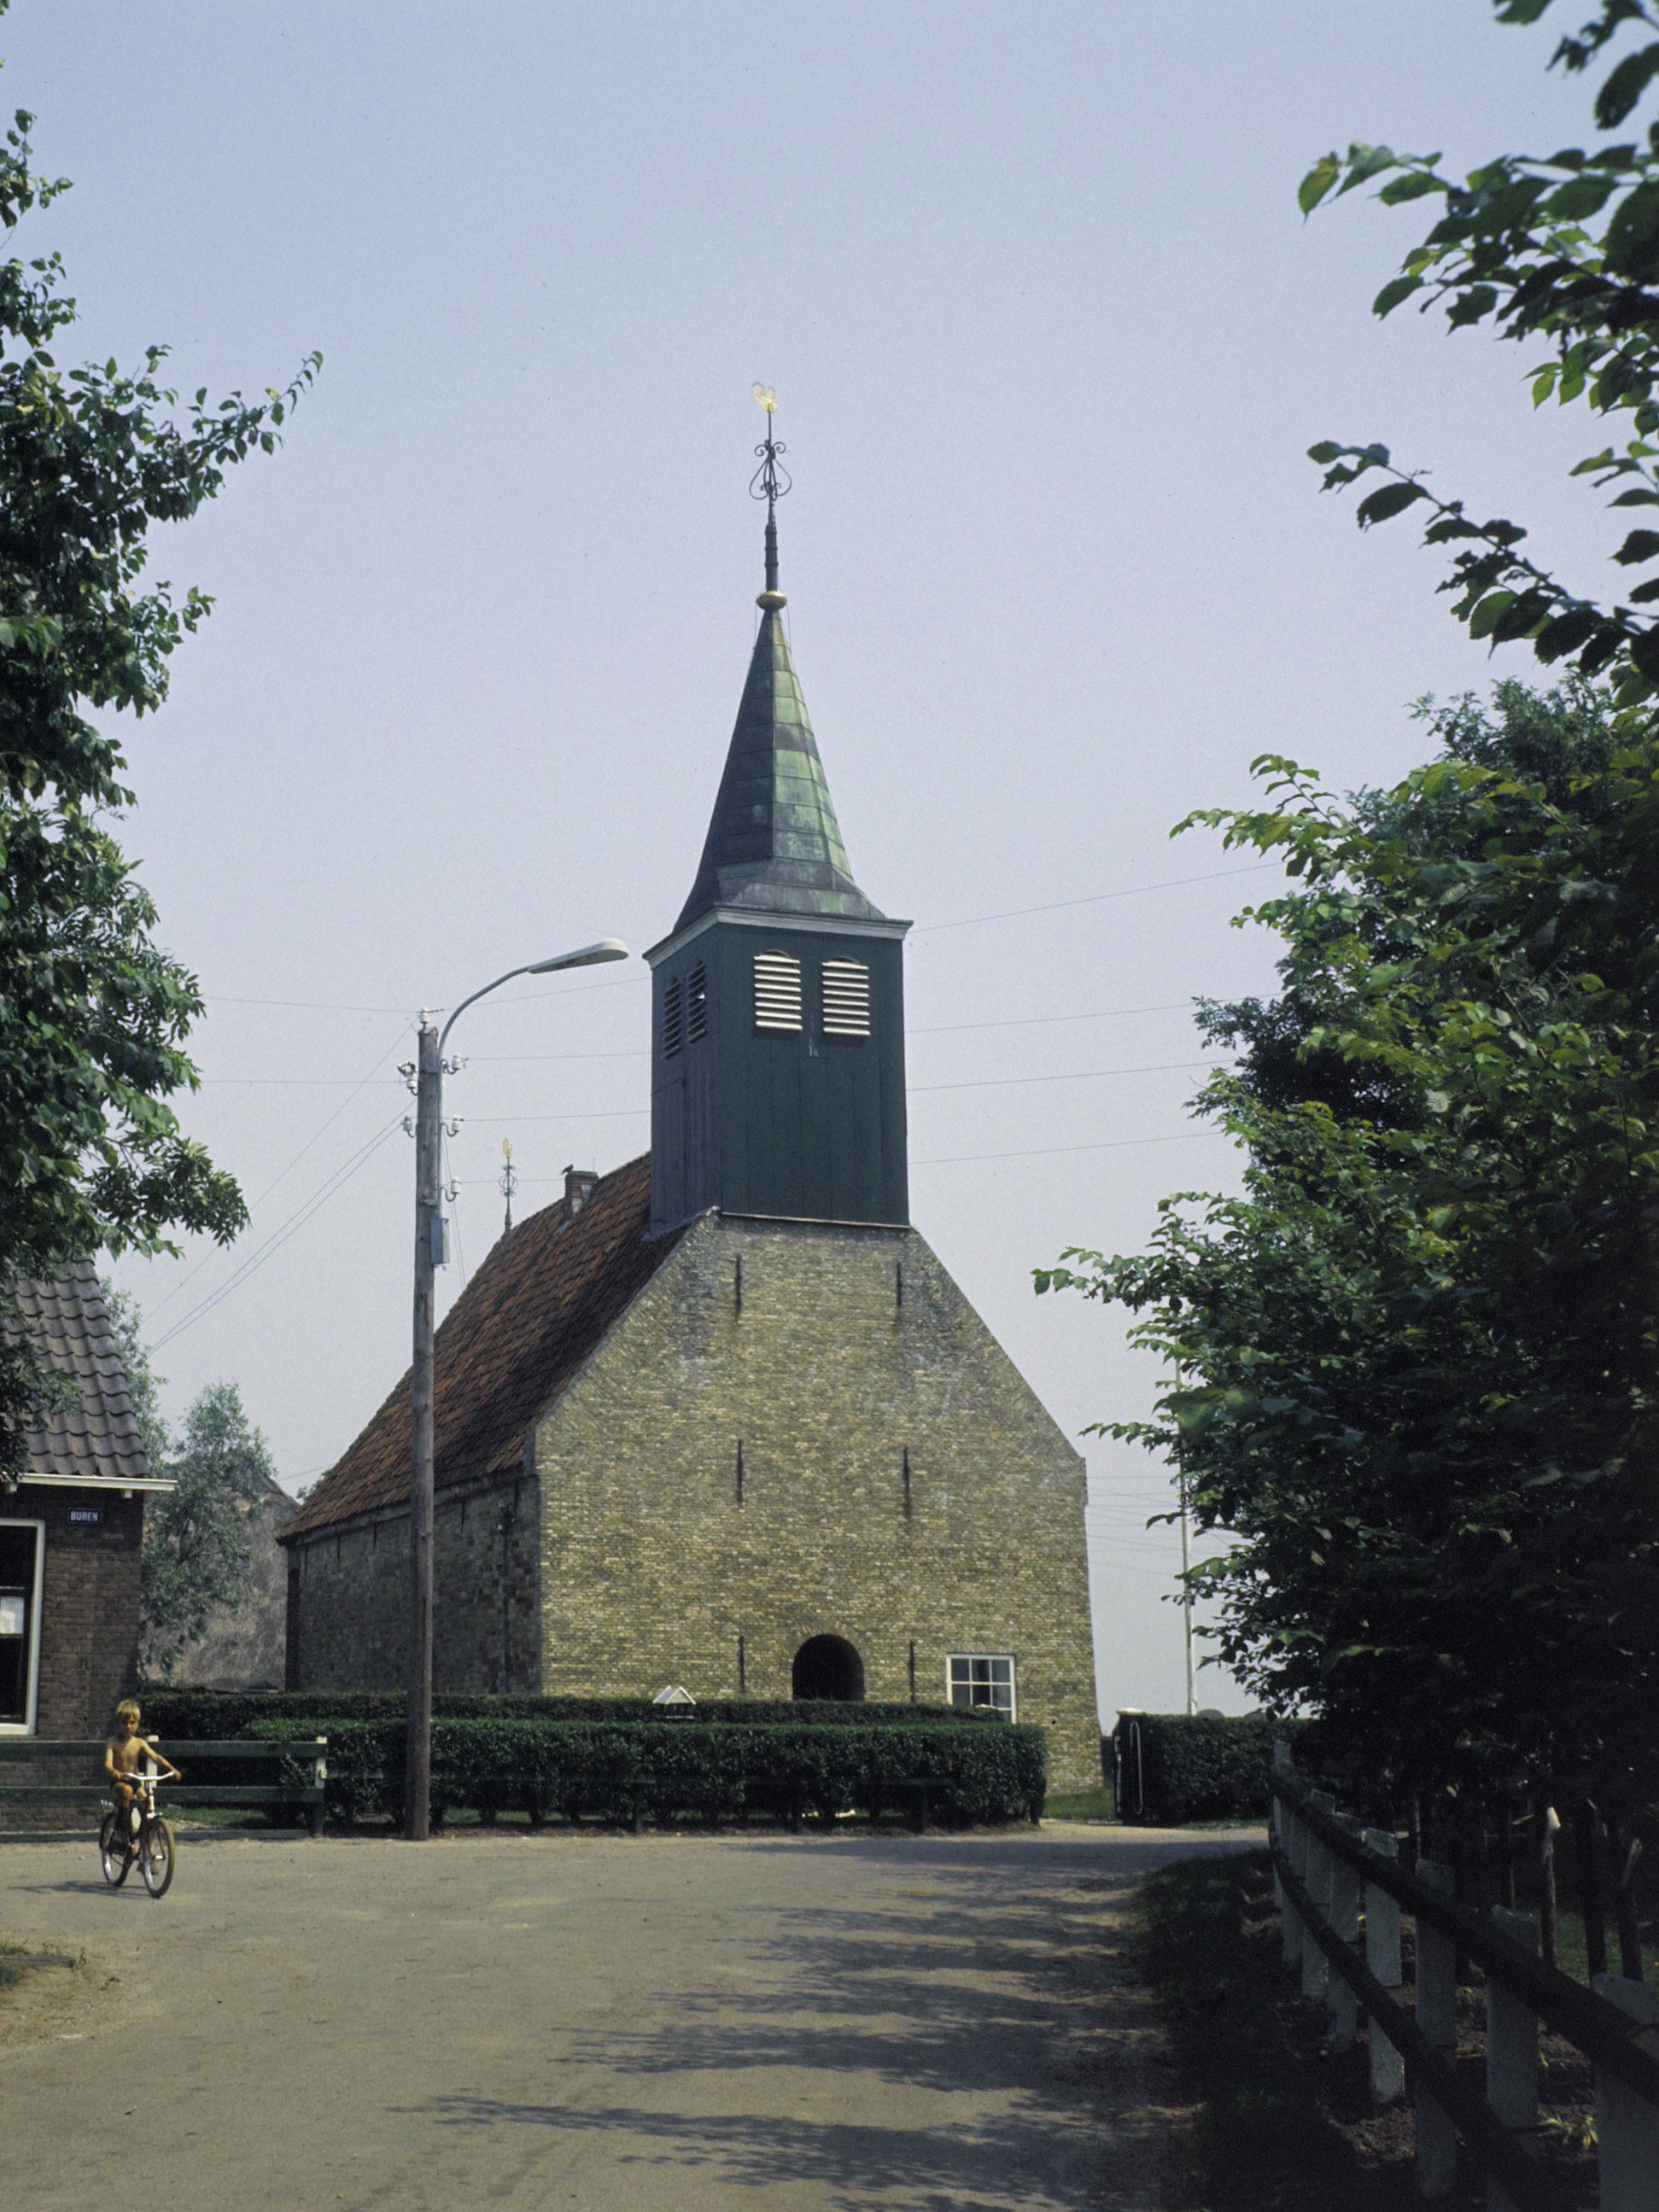 Dorp Piaam in Friesland (1970)